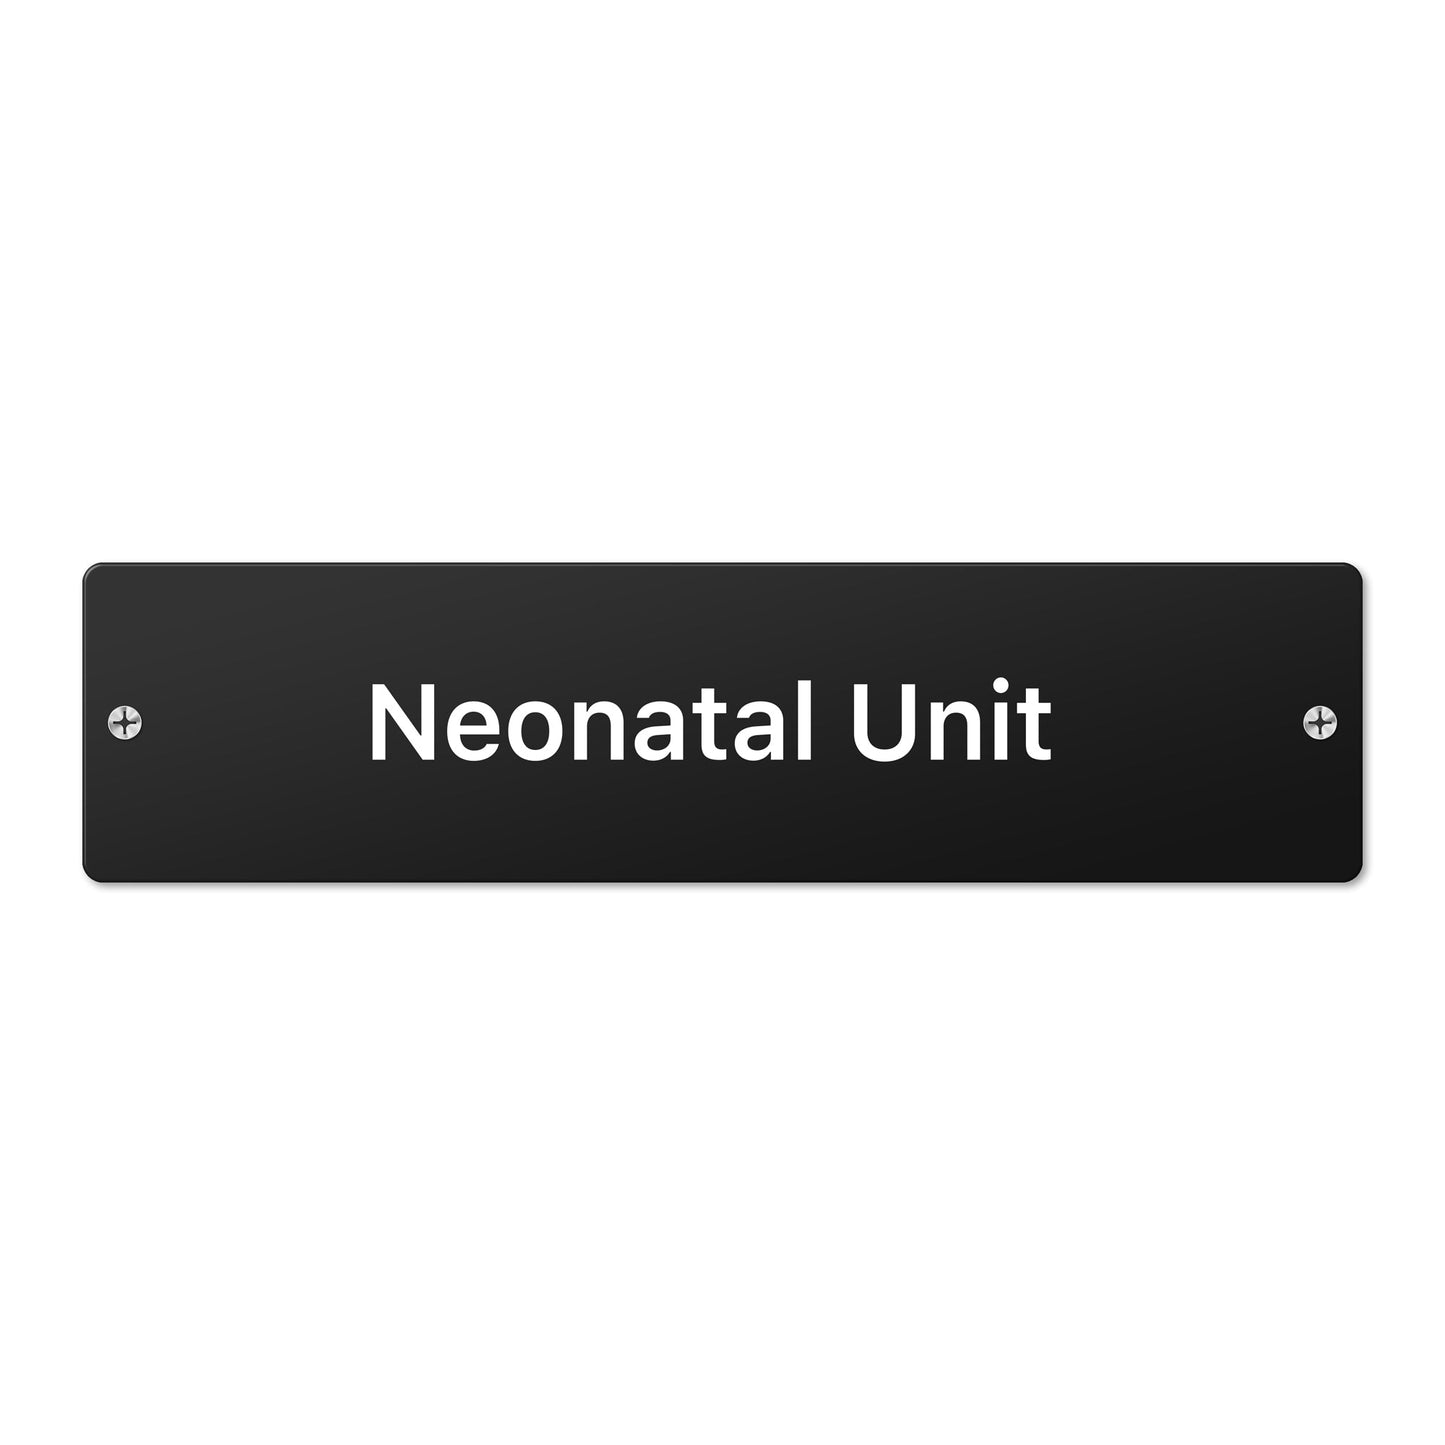 Neonatal Unit